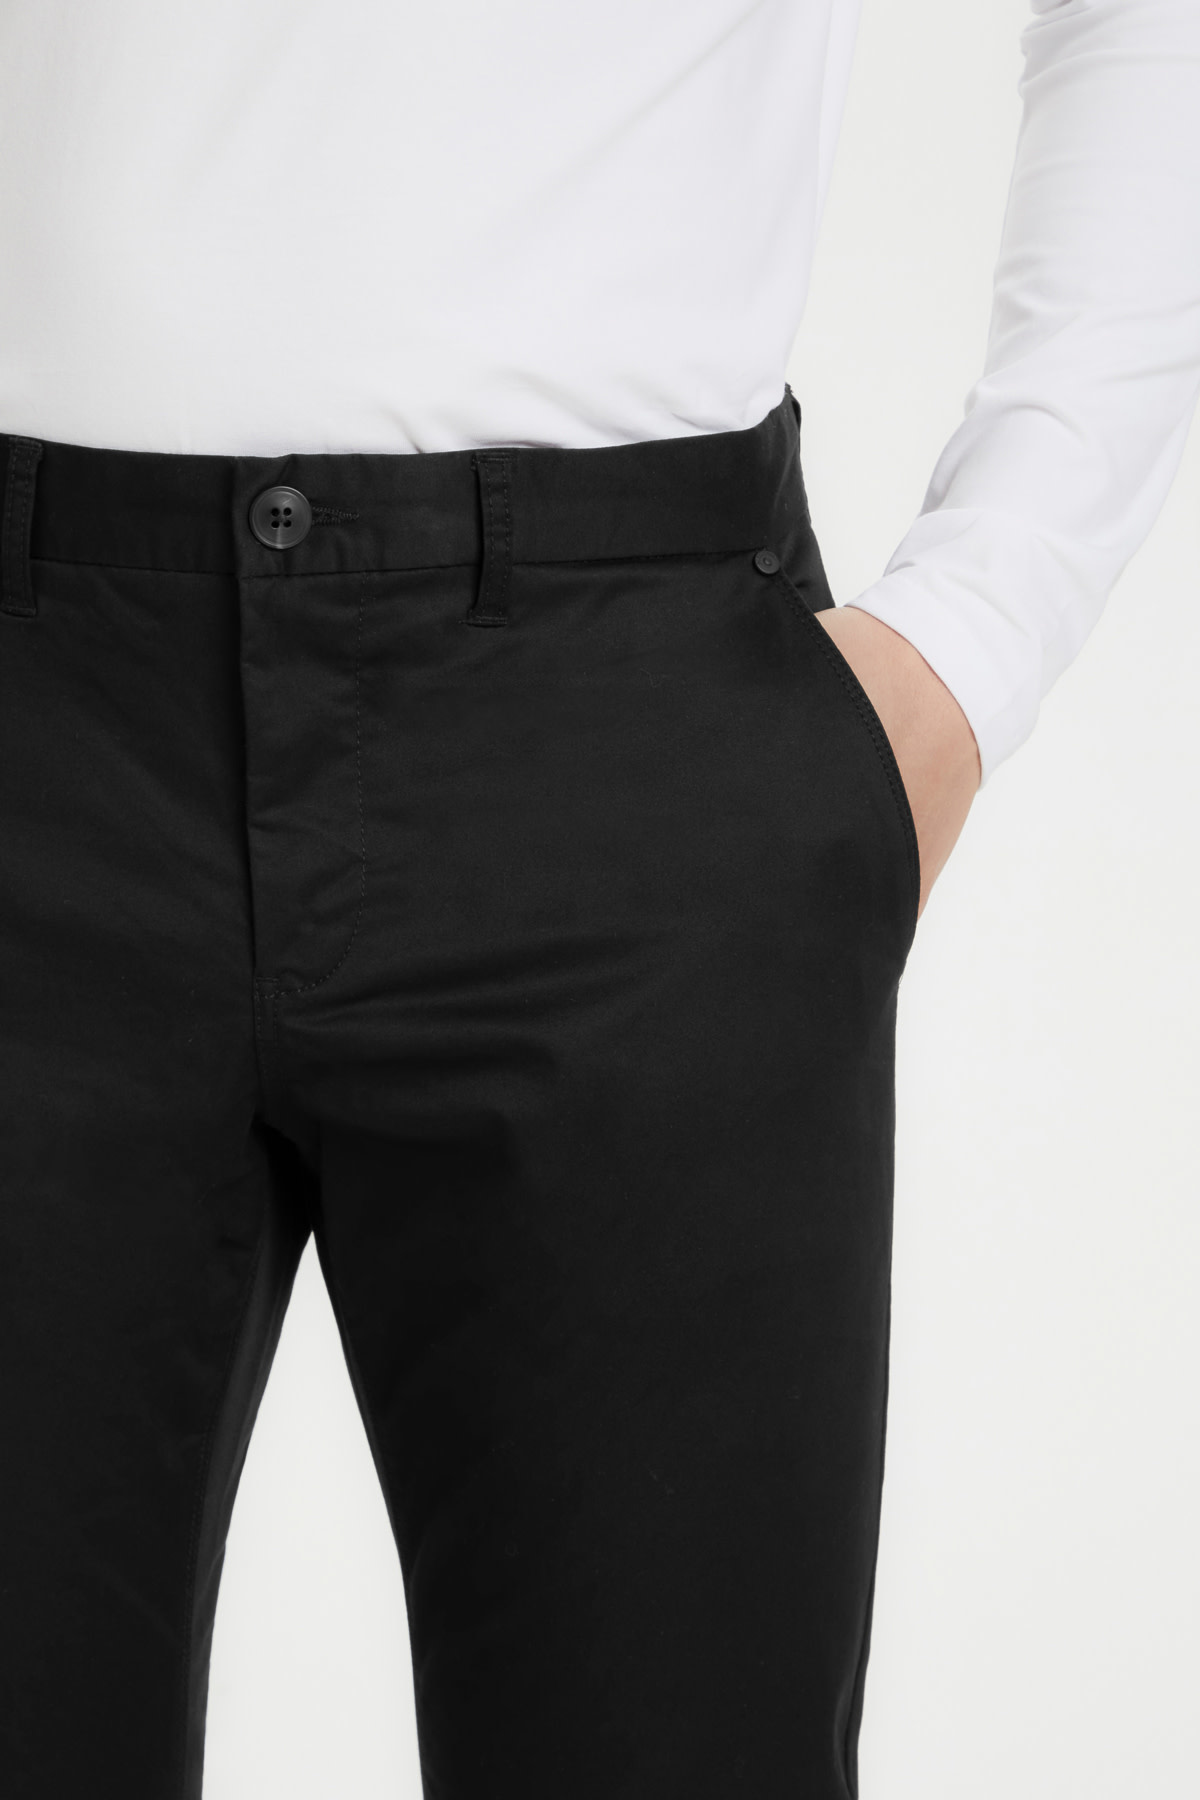 Cotton Sateen Dressy Pants - Black